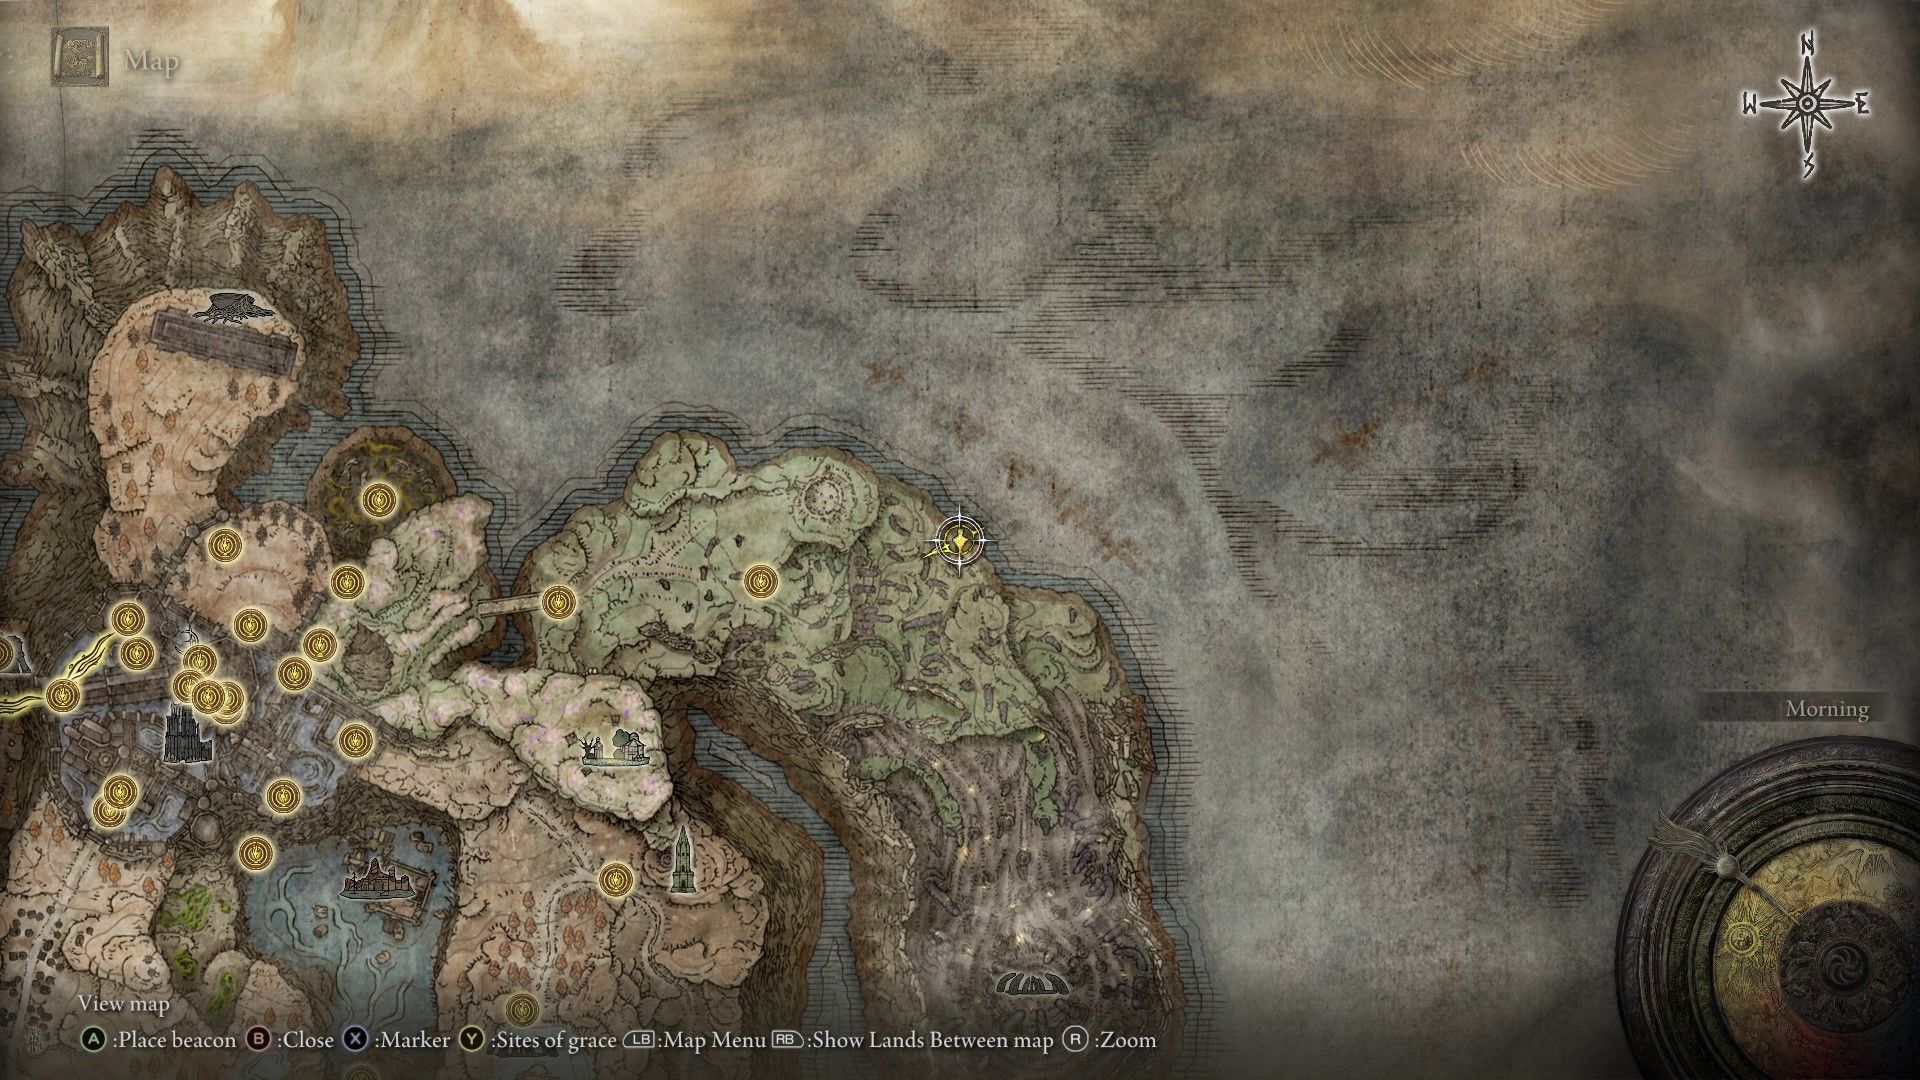 Elden Ring DLC - Mausoleum Coffin near Finger Ruins of Dheo map location